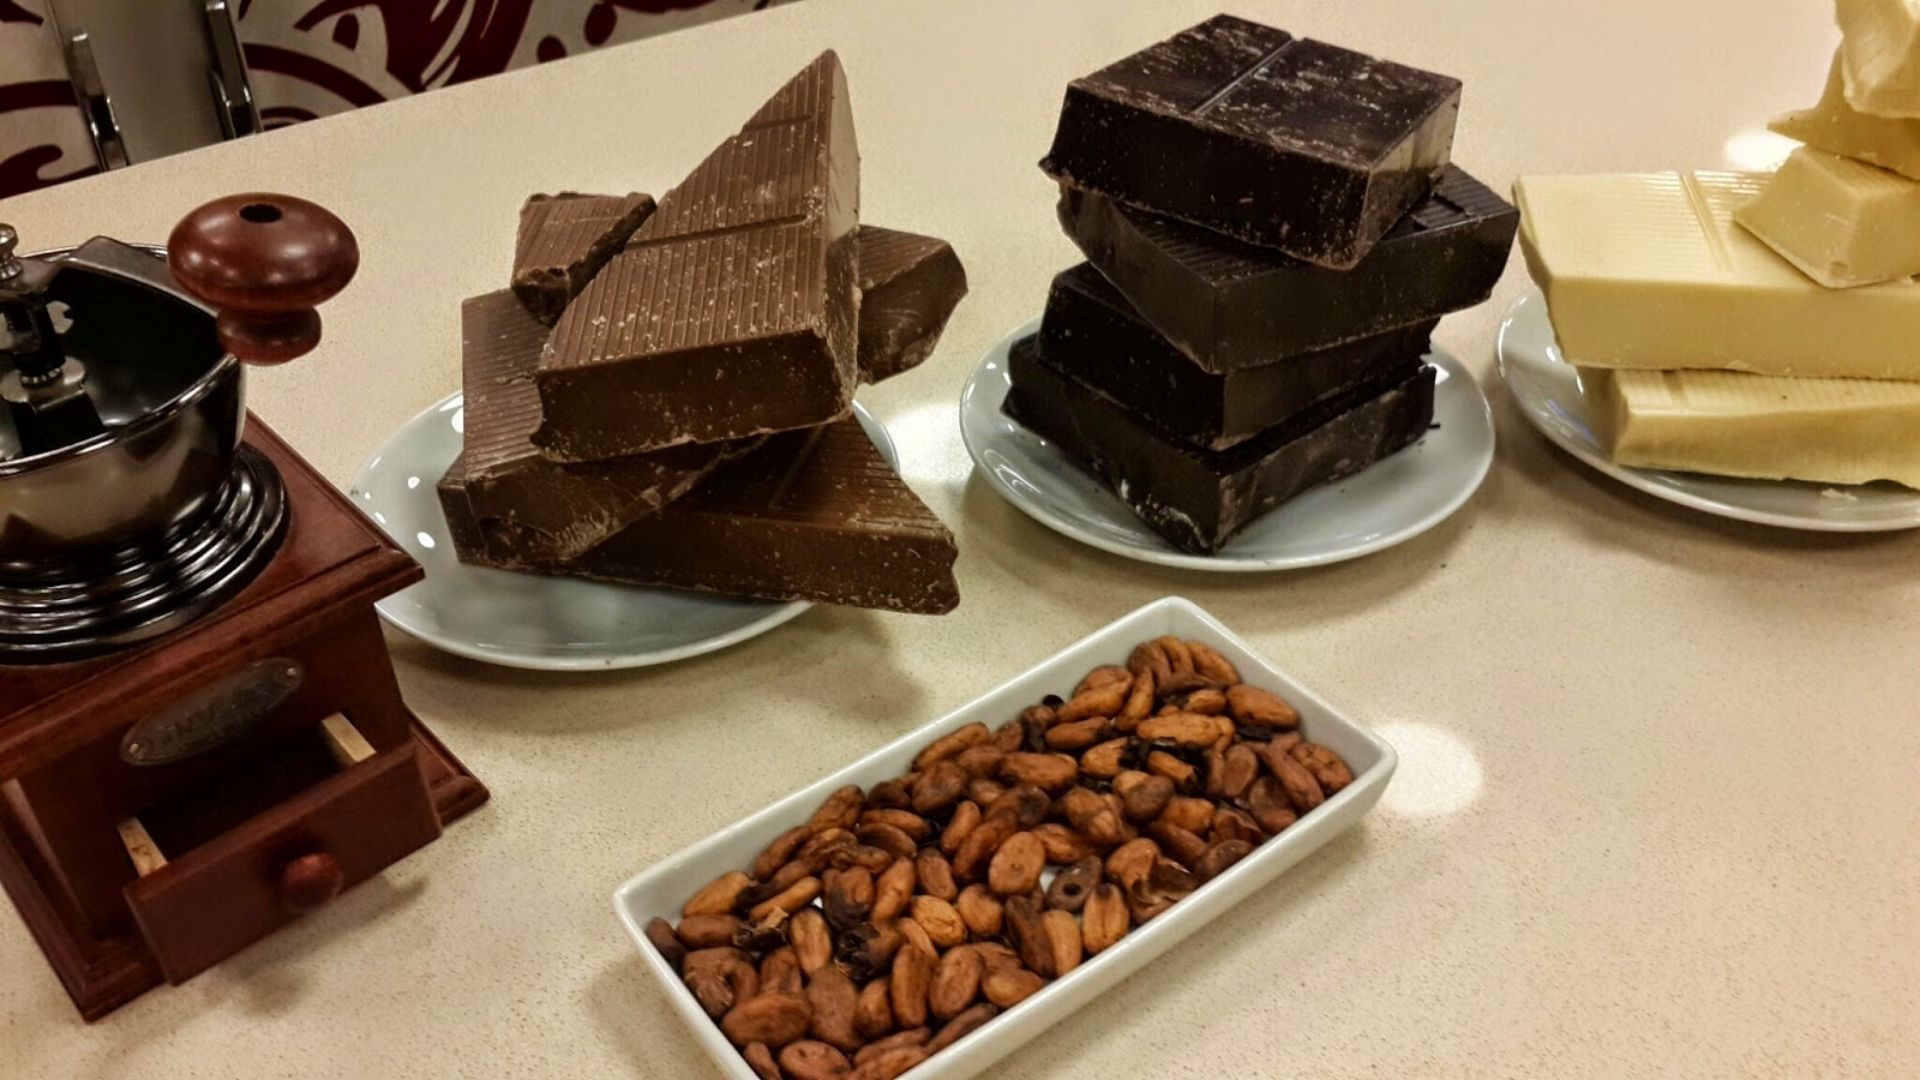 kahve dunyasi atolyesi cikolata kasim workshop ve atolyeler